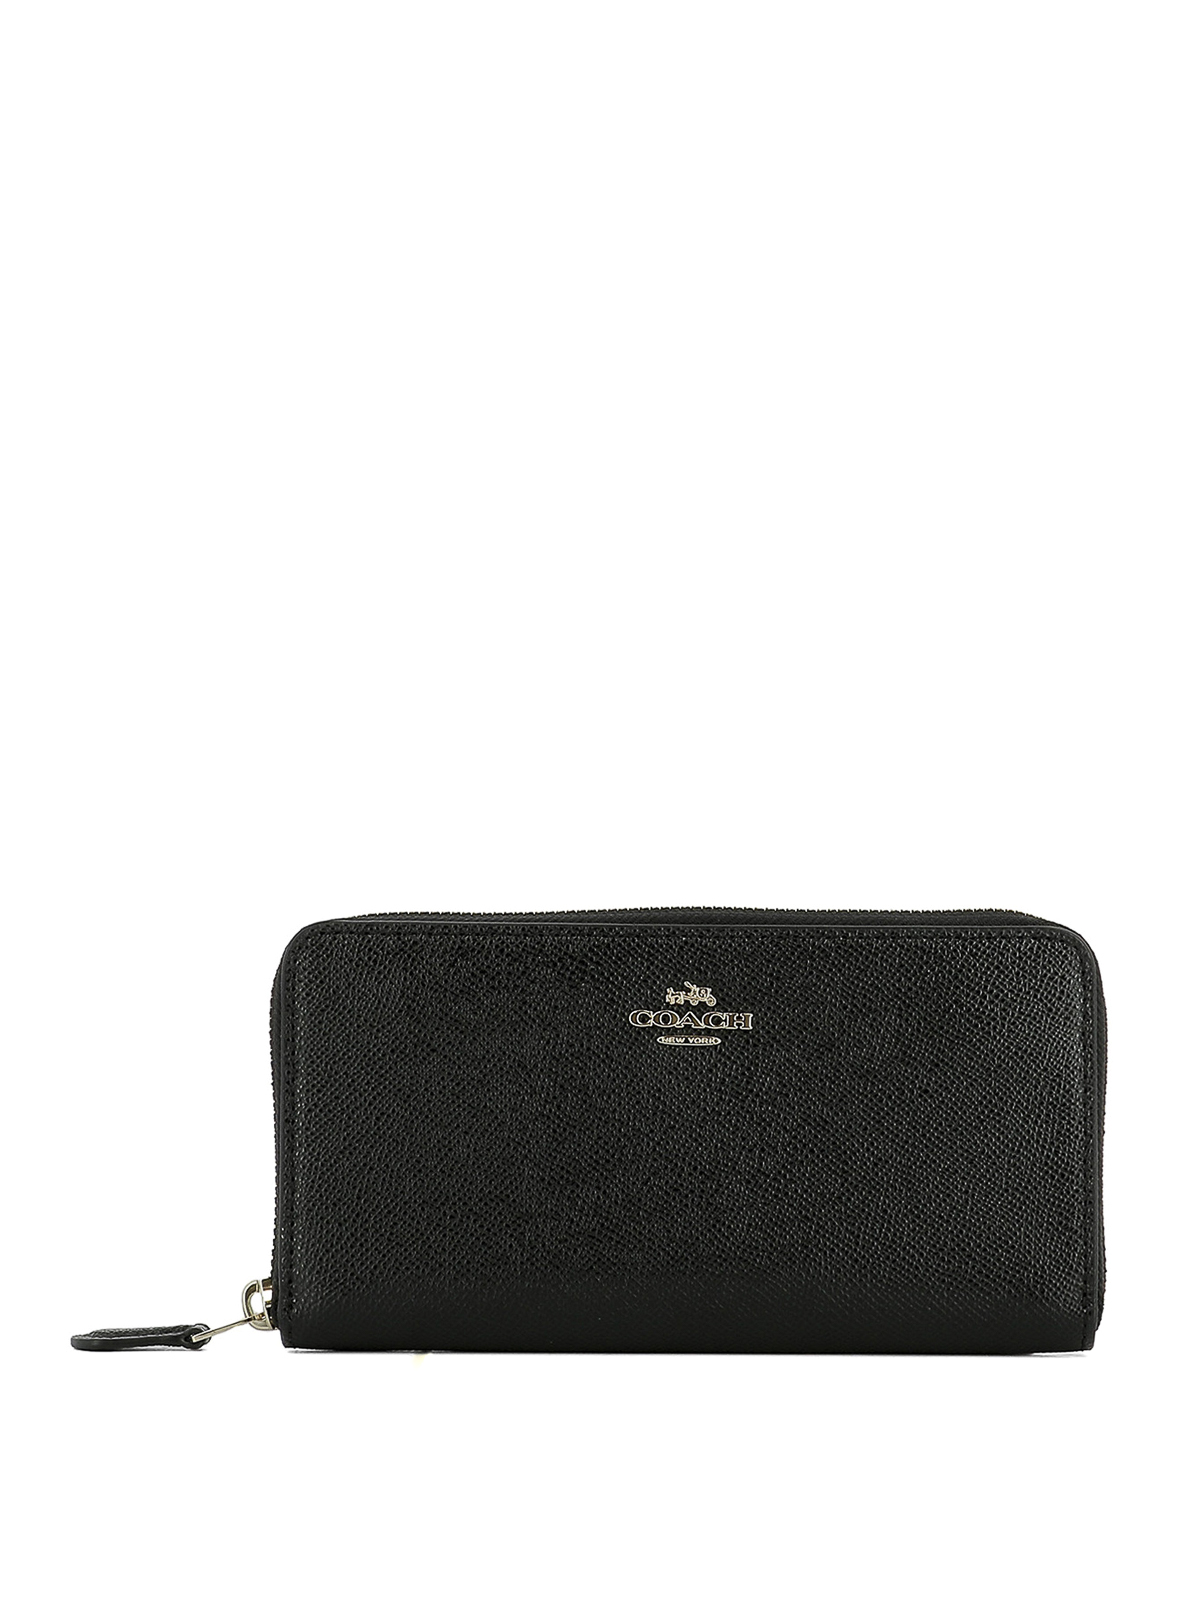 Coach - Accordion leather zip around wallet - wallets & purses - 57713 LIBLACK